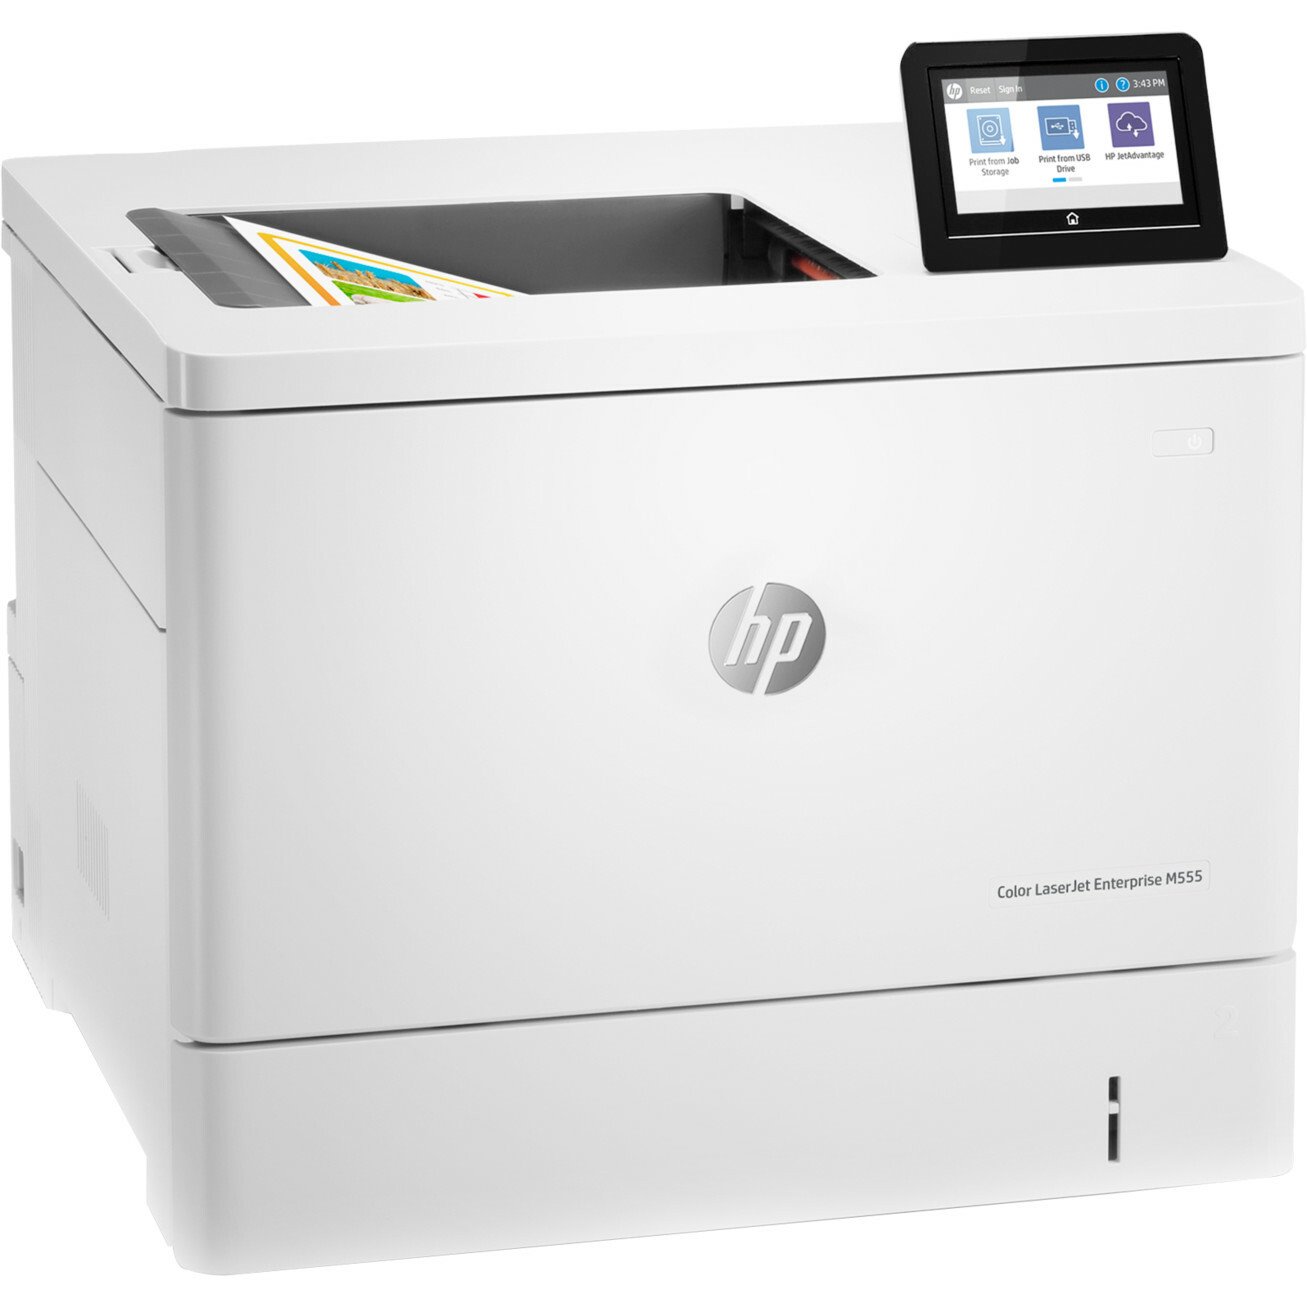 HP LaserJet Enterprise M555 M555dn Desktop Laser Printer - Colour